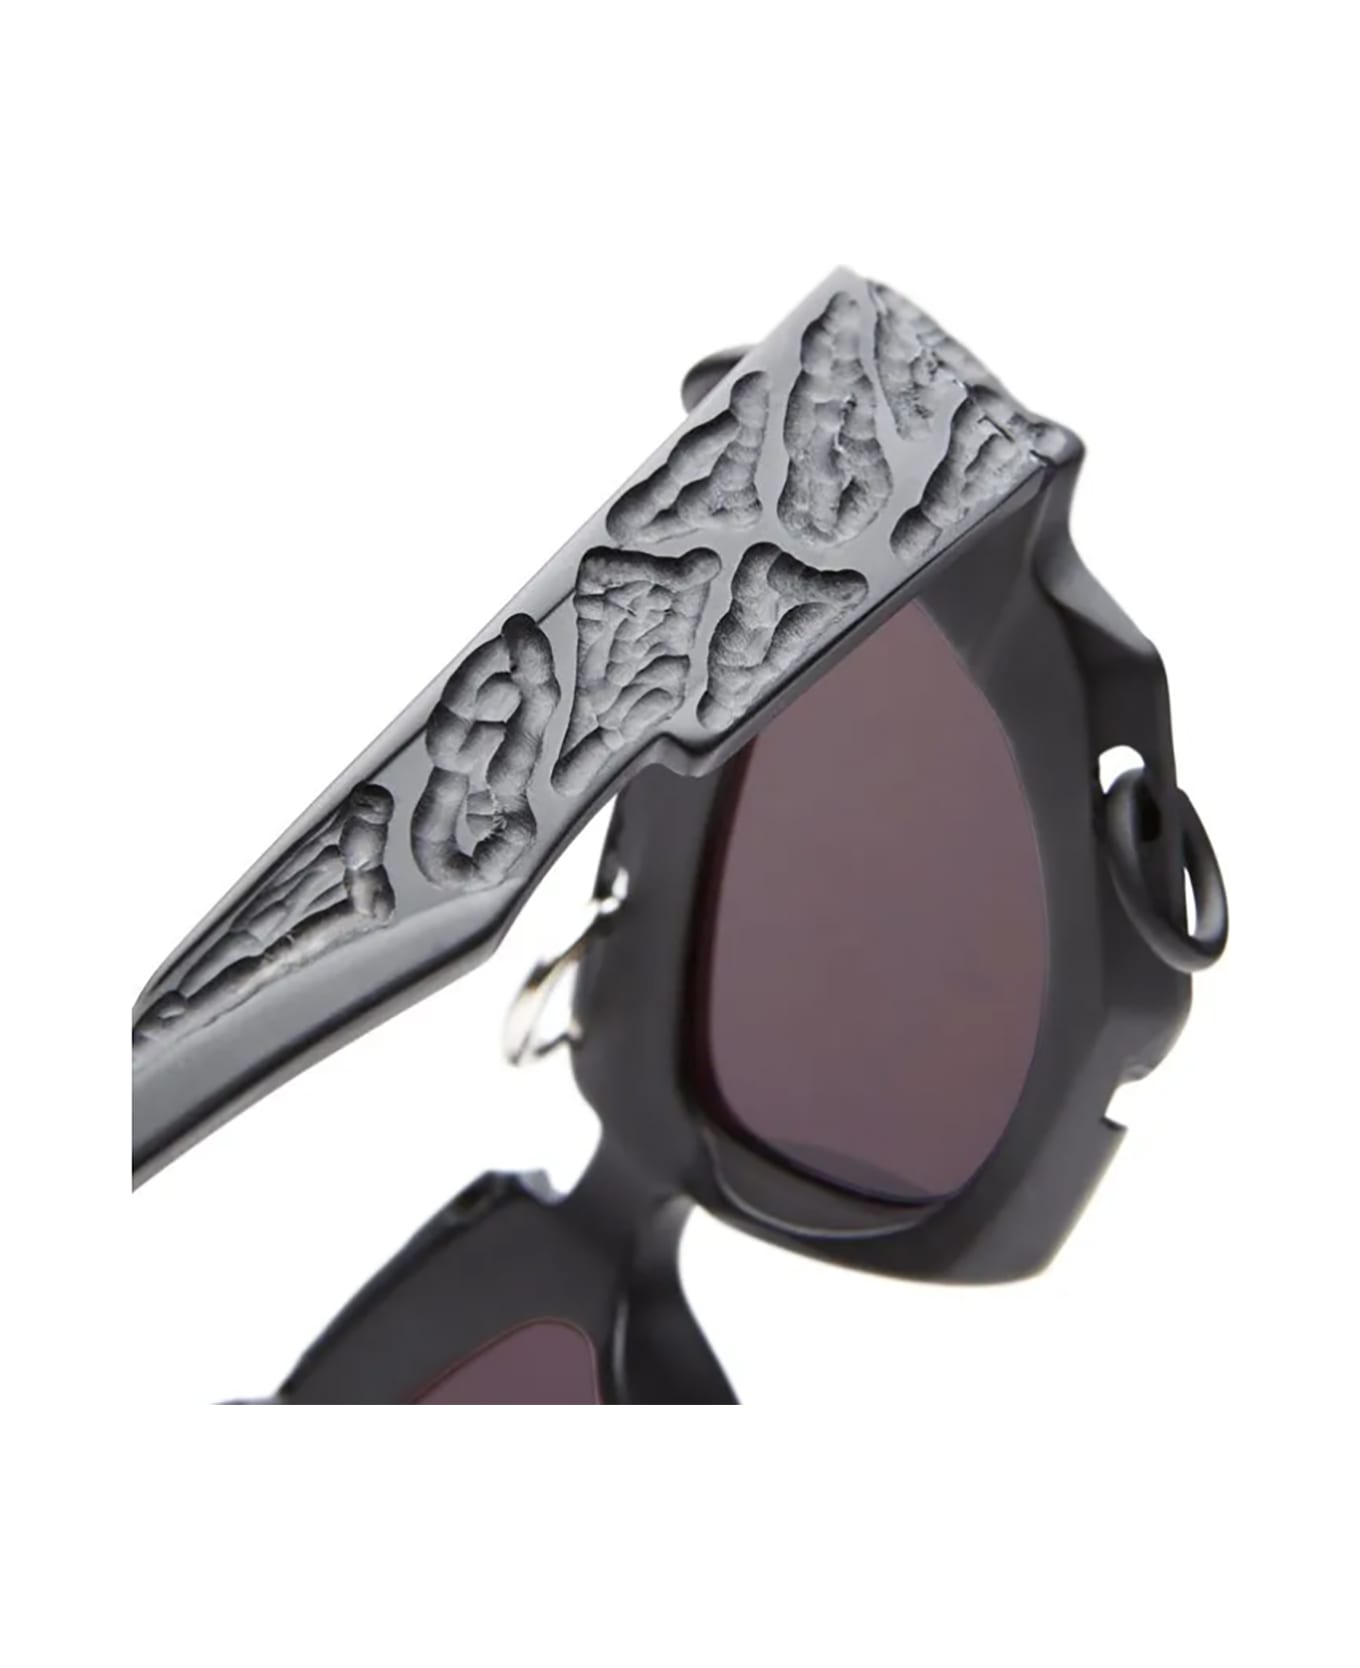 Kuboraum F5 Sunglasses - Bm Hypercore サングラス